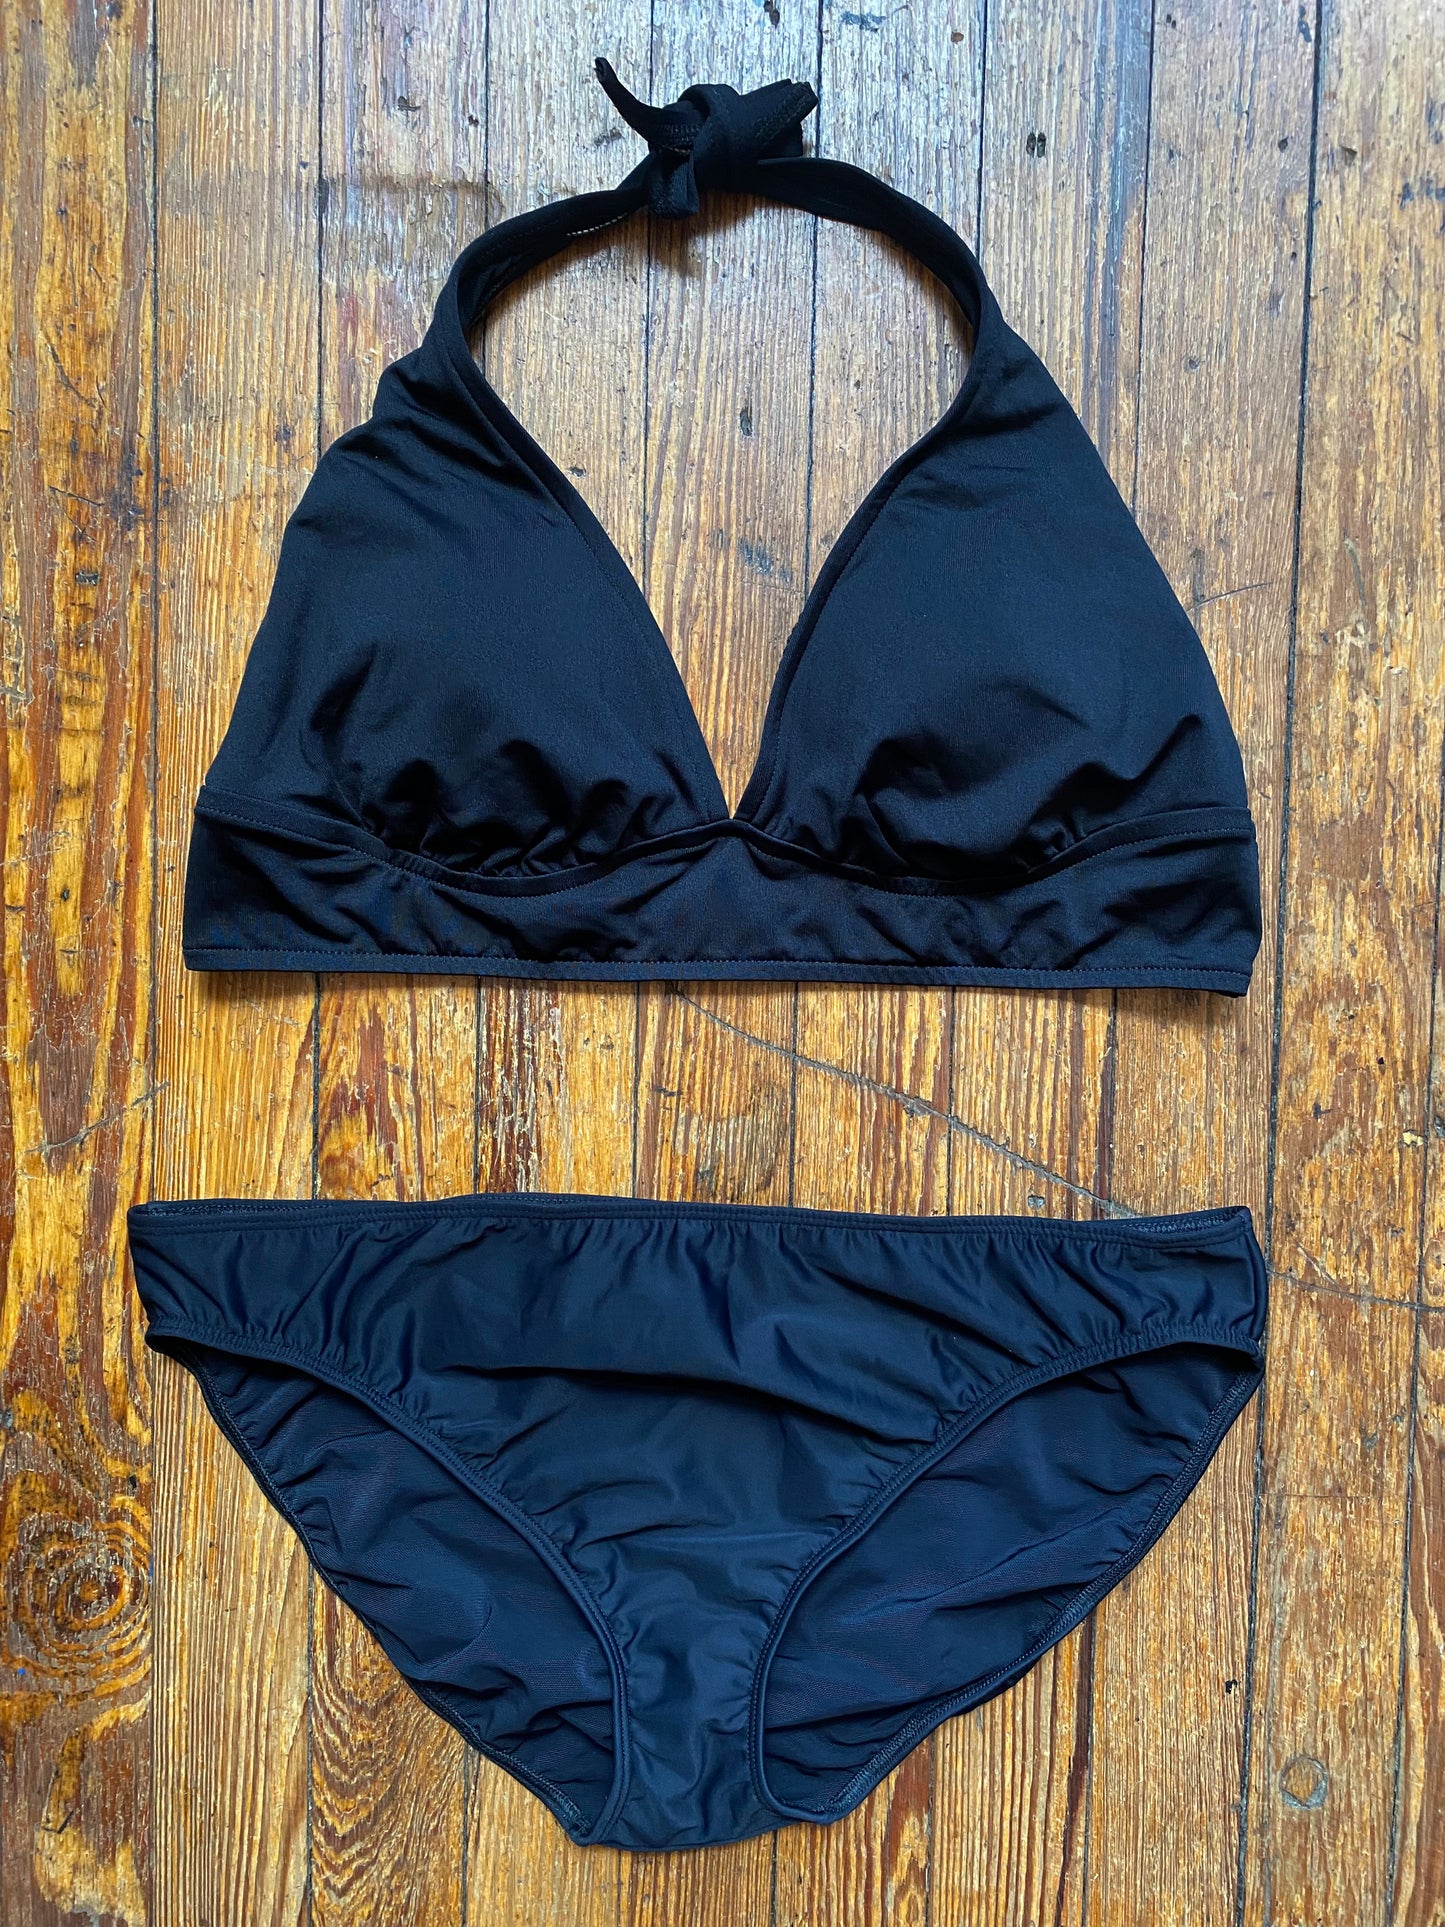 Black Halter Two Piece Swimsuit